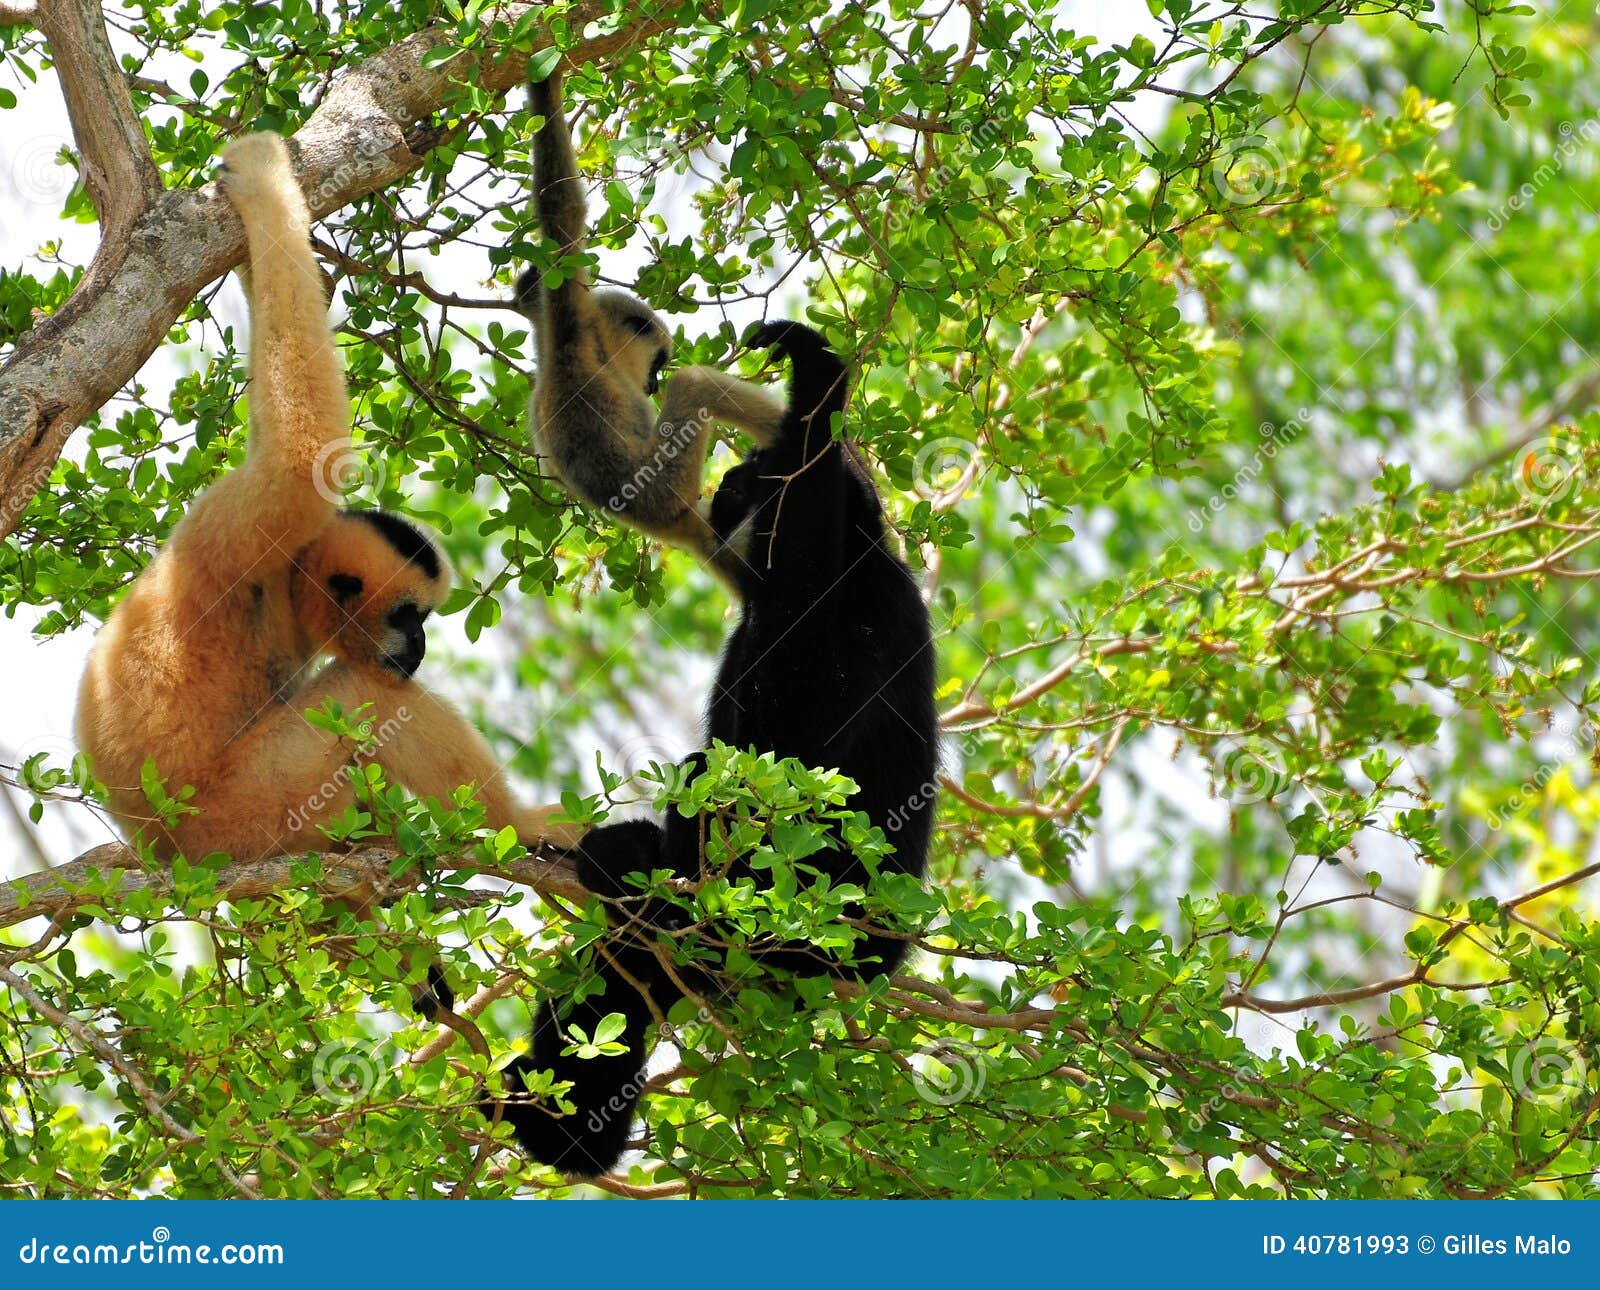 family of white-cheeked gibbon monkeys in tree